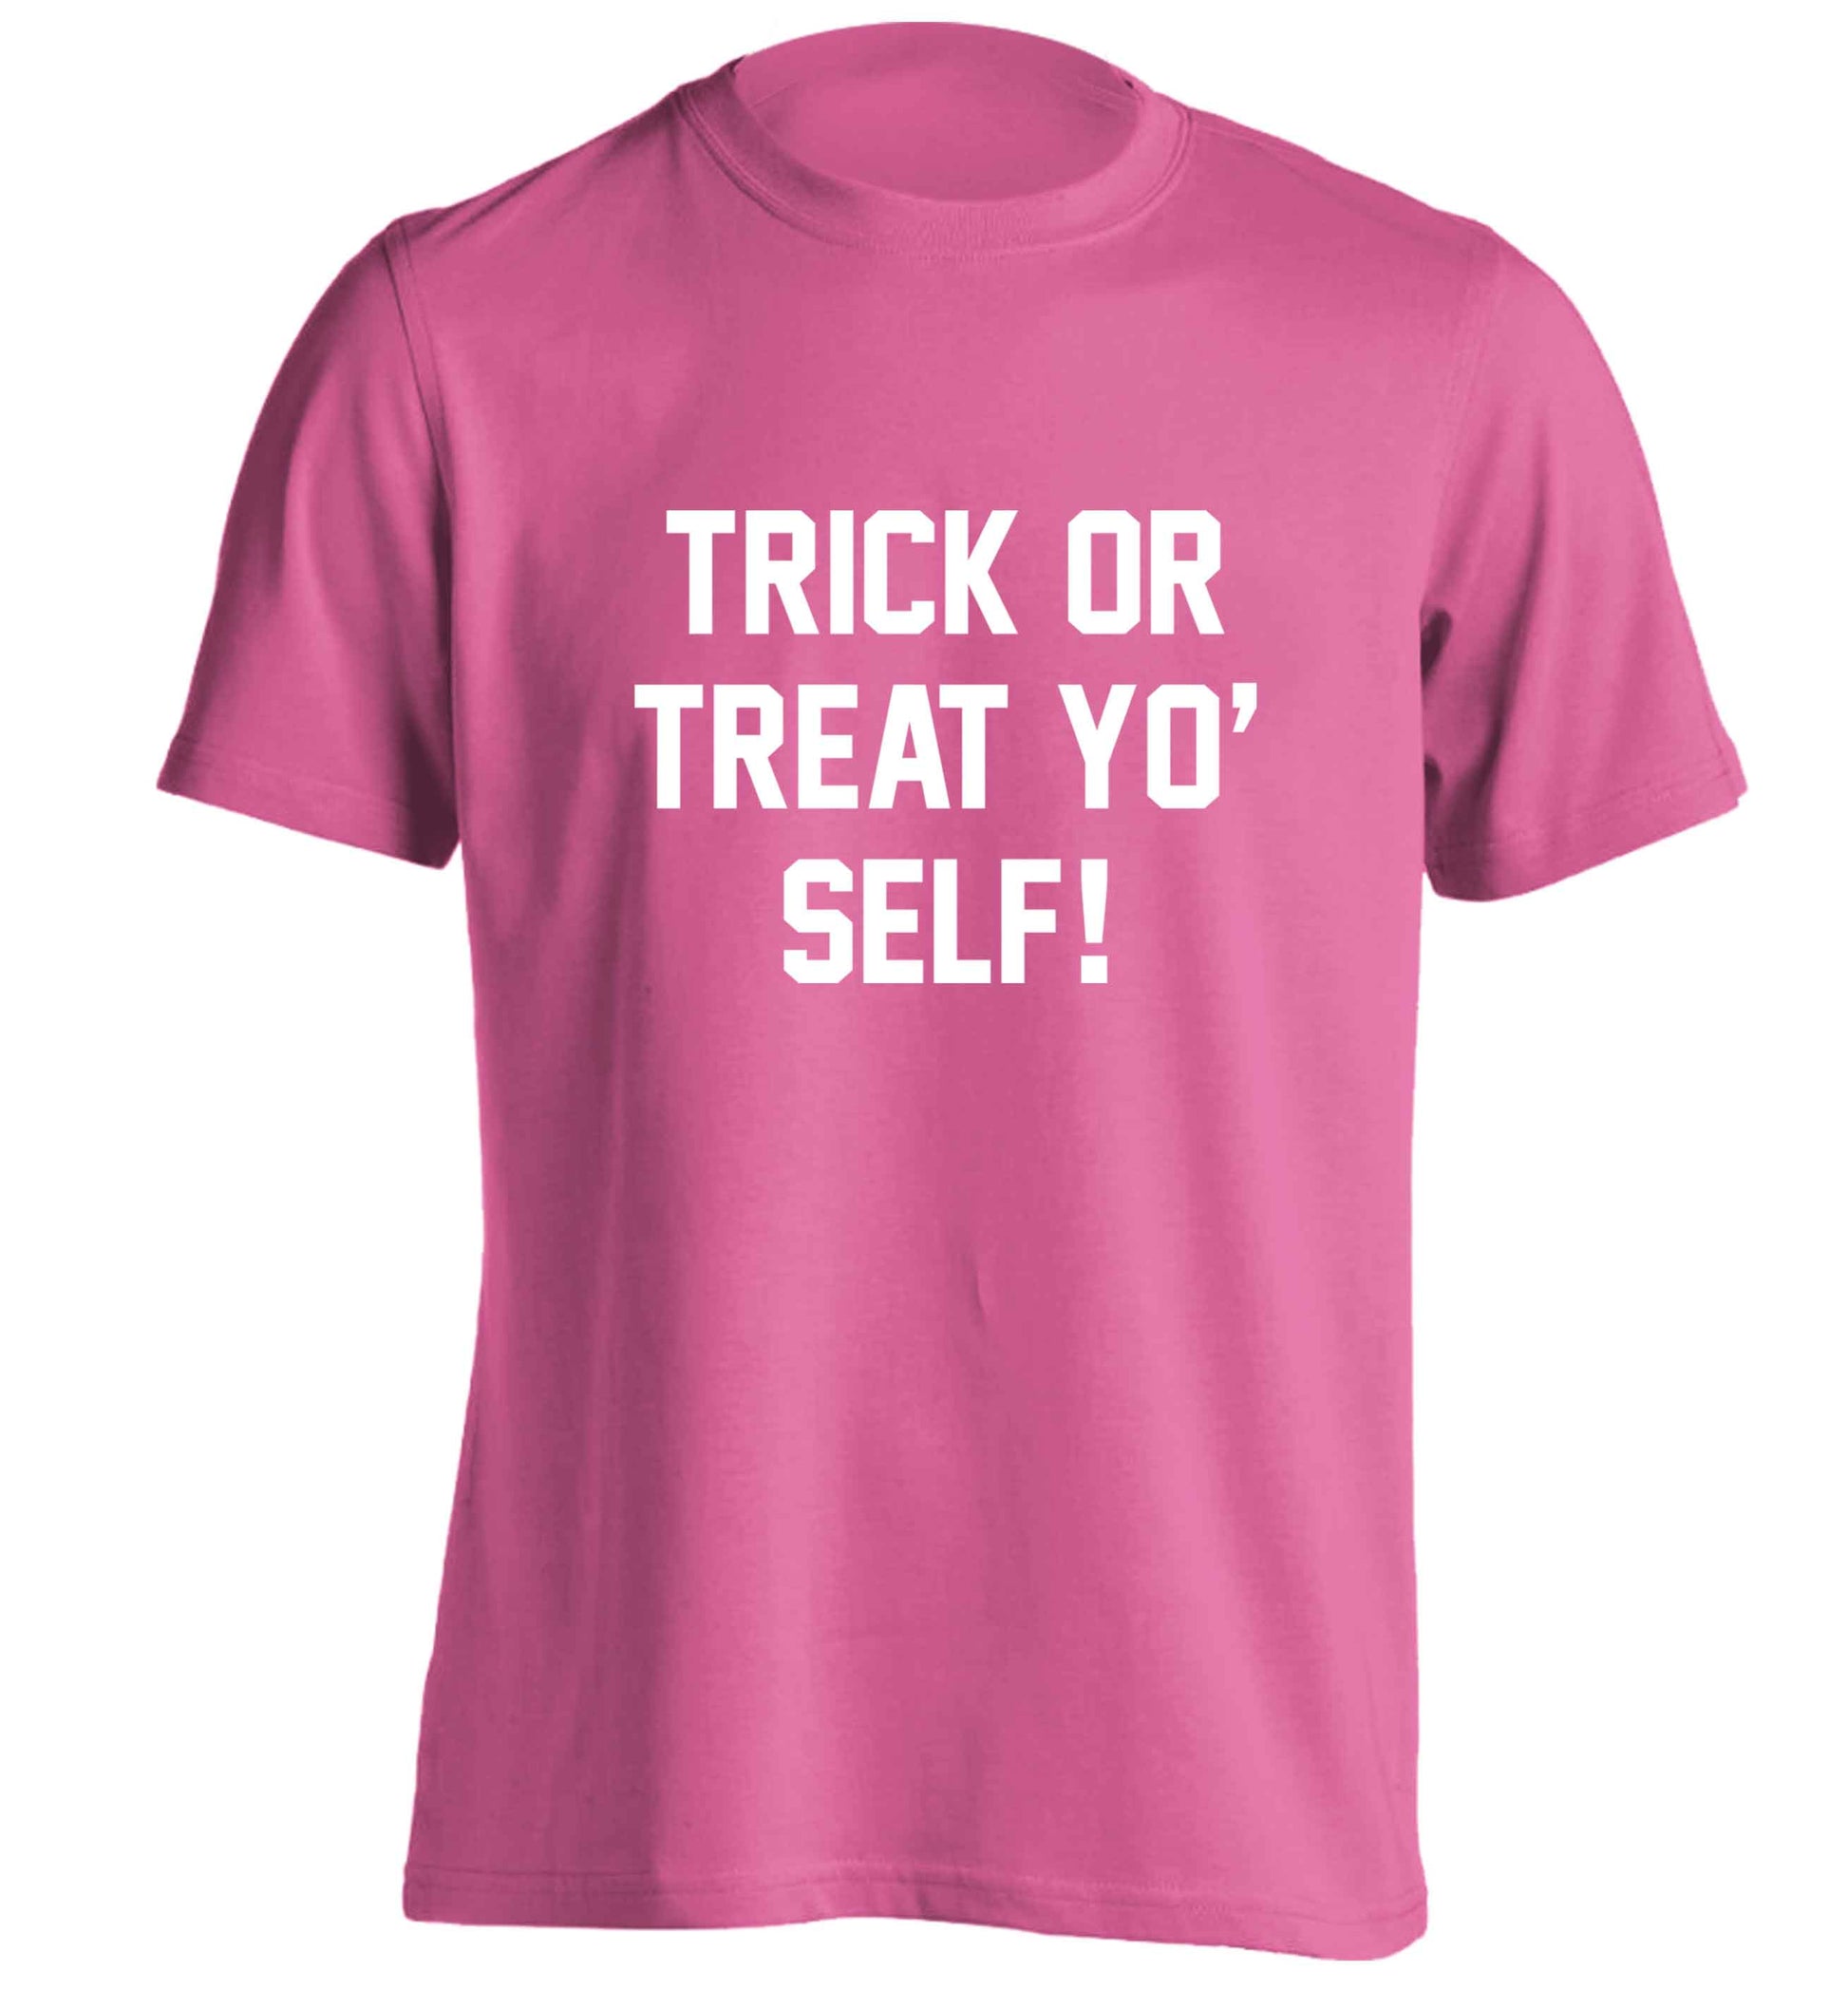 Trick or Treat Yo' Self adults unisex pink Tshirt 2XL